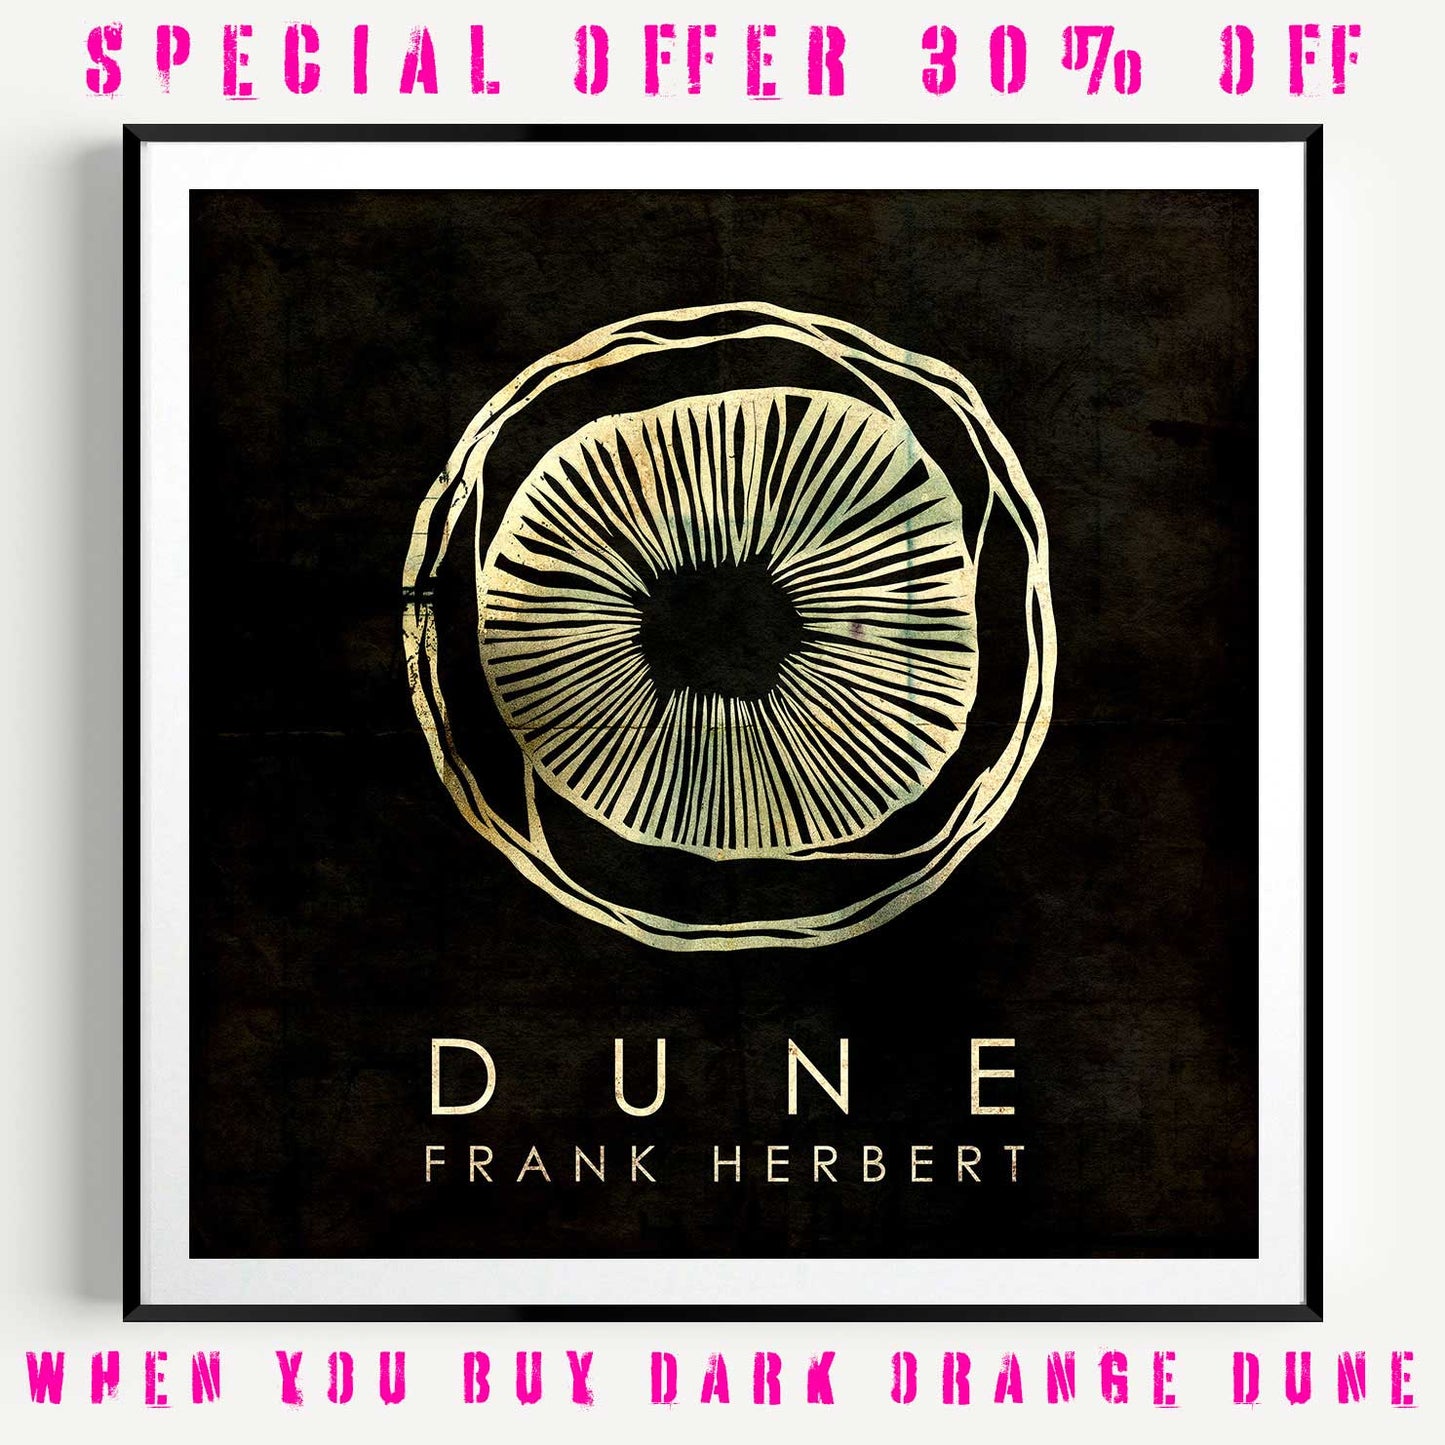 DUNE// Dark Orange DUNE Grunge Book Cover Print